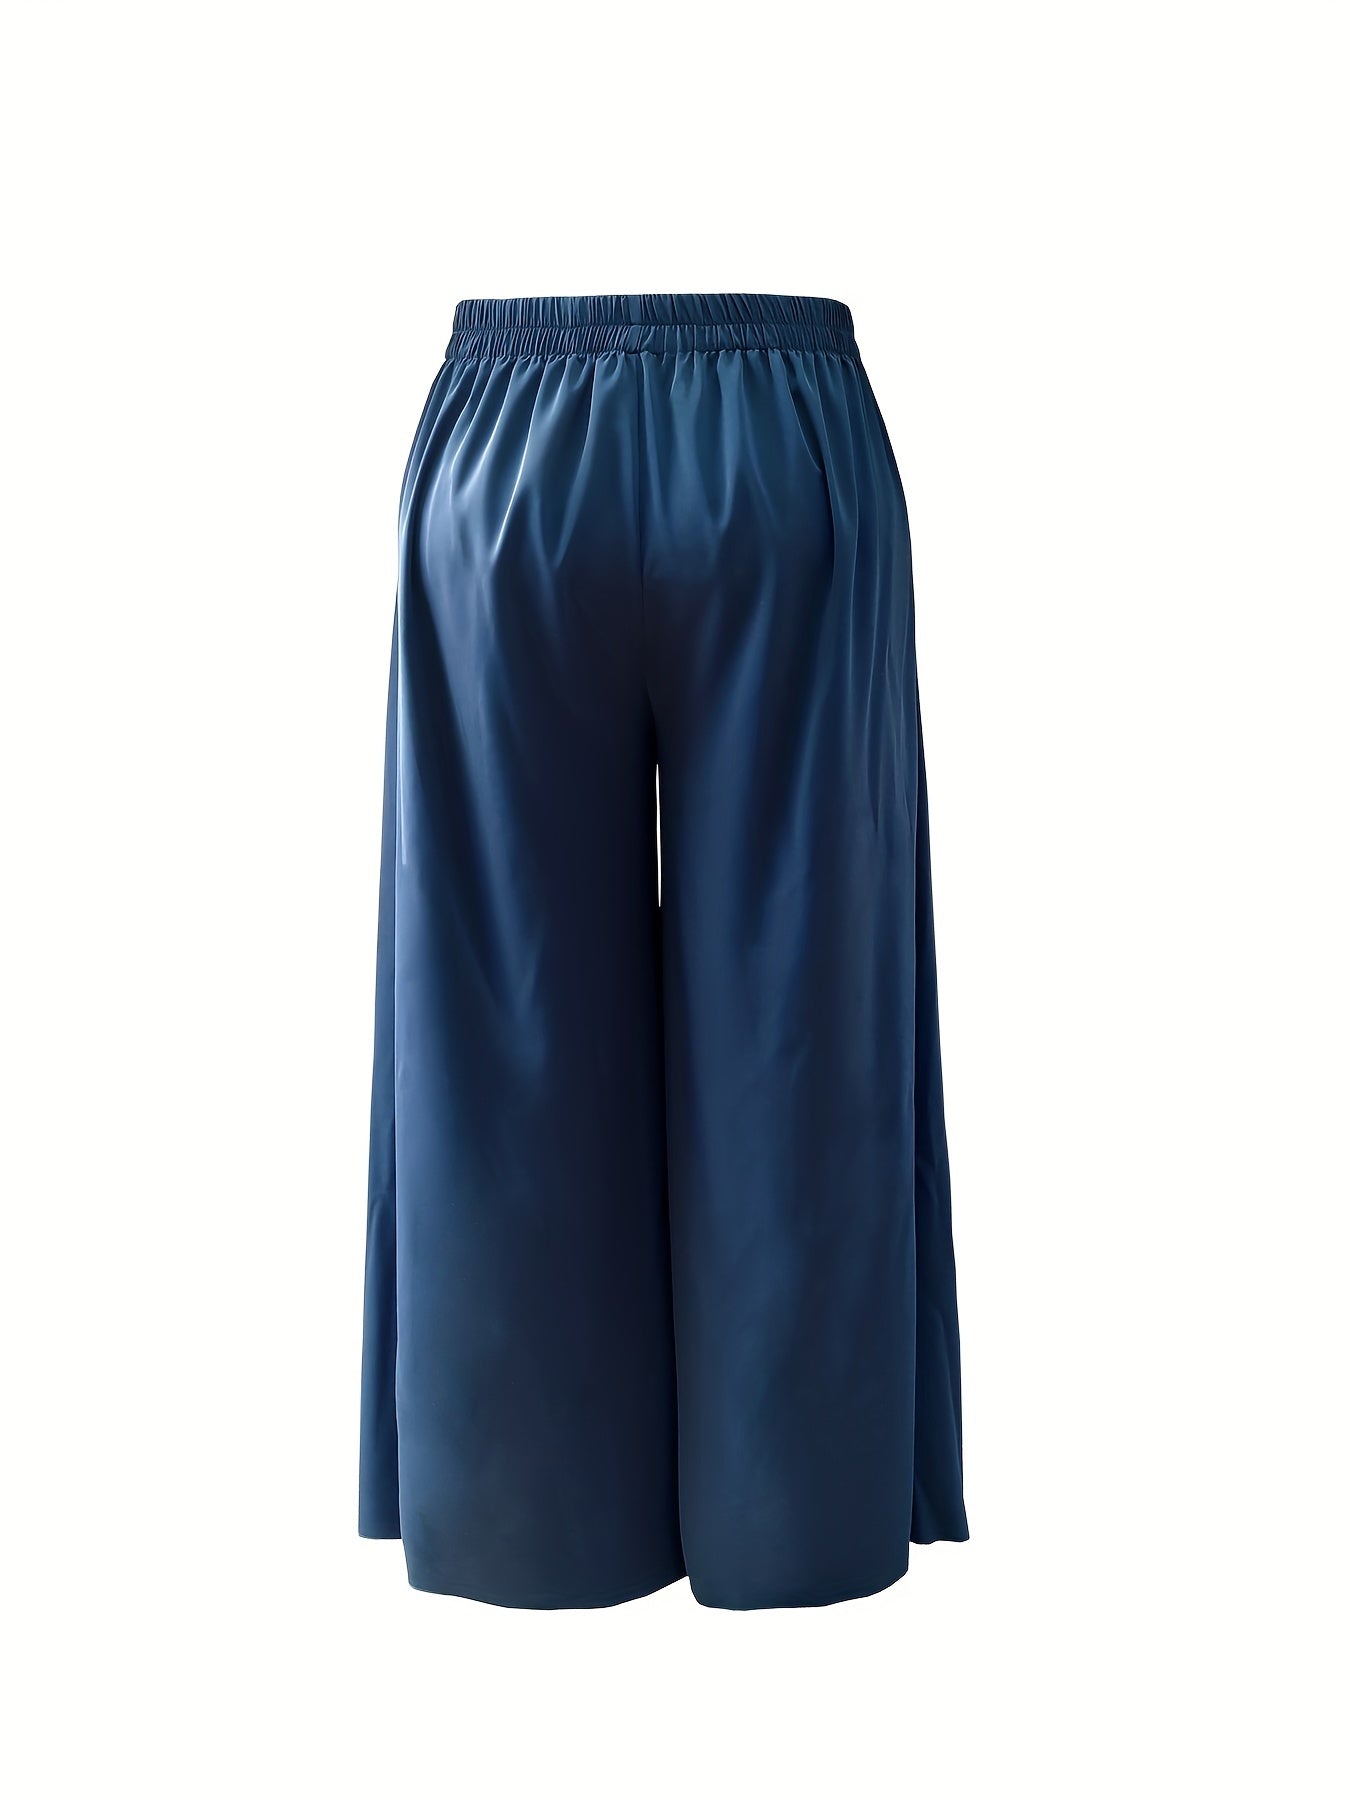 vlovelaw Plus Size Casual Pants, Women's Plus Solid Elastic Button Decor High Rise Loose Fit Wide Leg Trousers